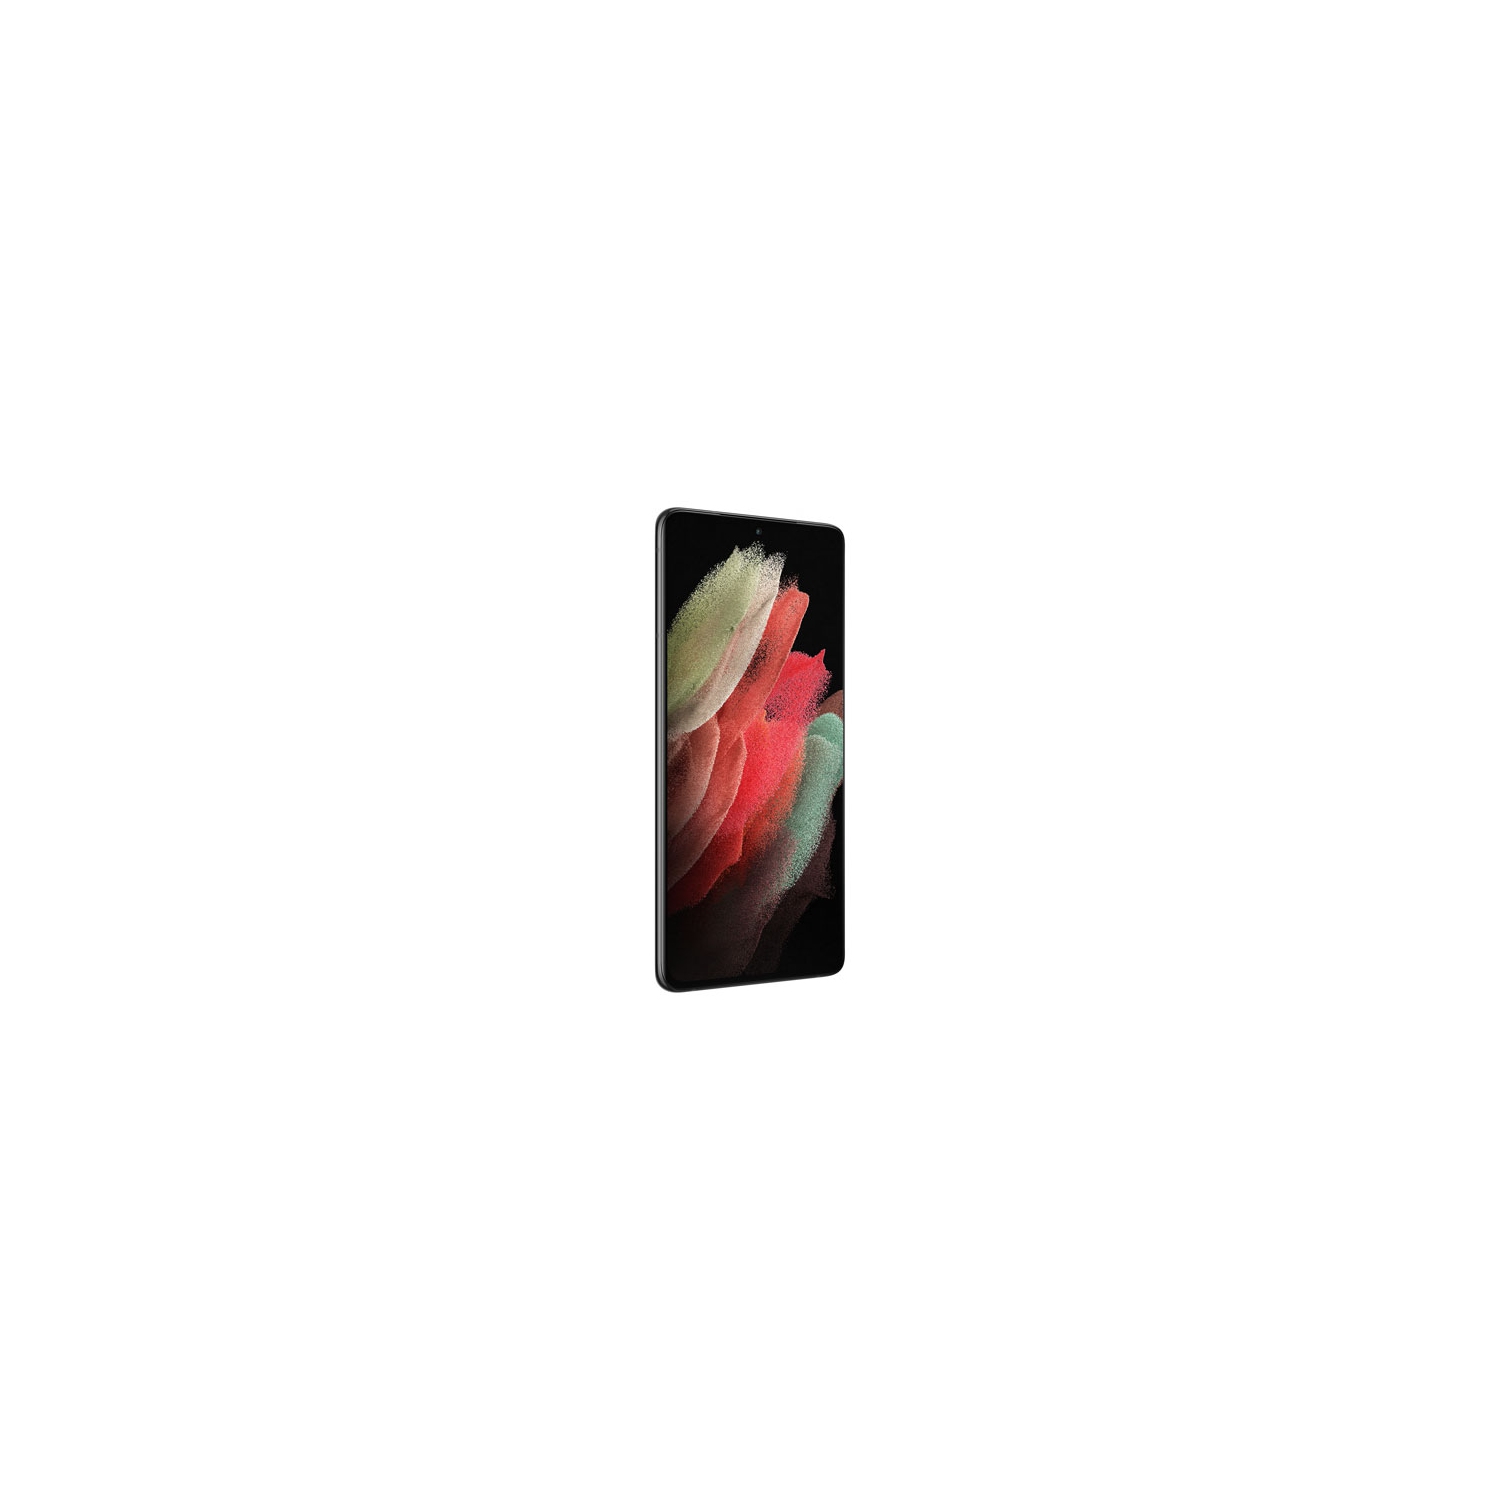 Refurbished (Good) - Samsung Galaxy S21 Ultra 5G 128GB - Phantom Black - Unlocked - Refurbished